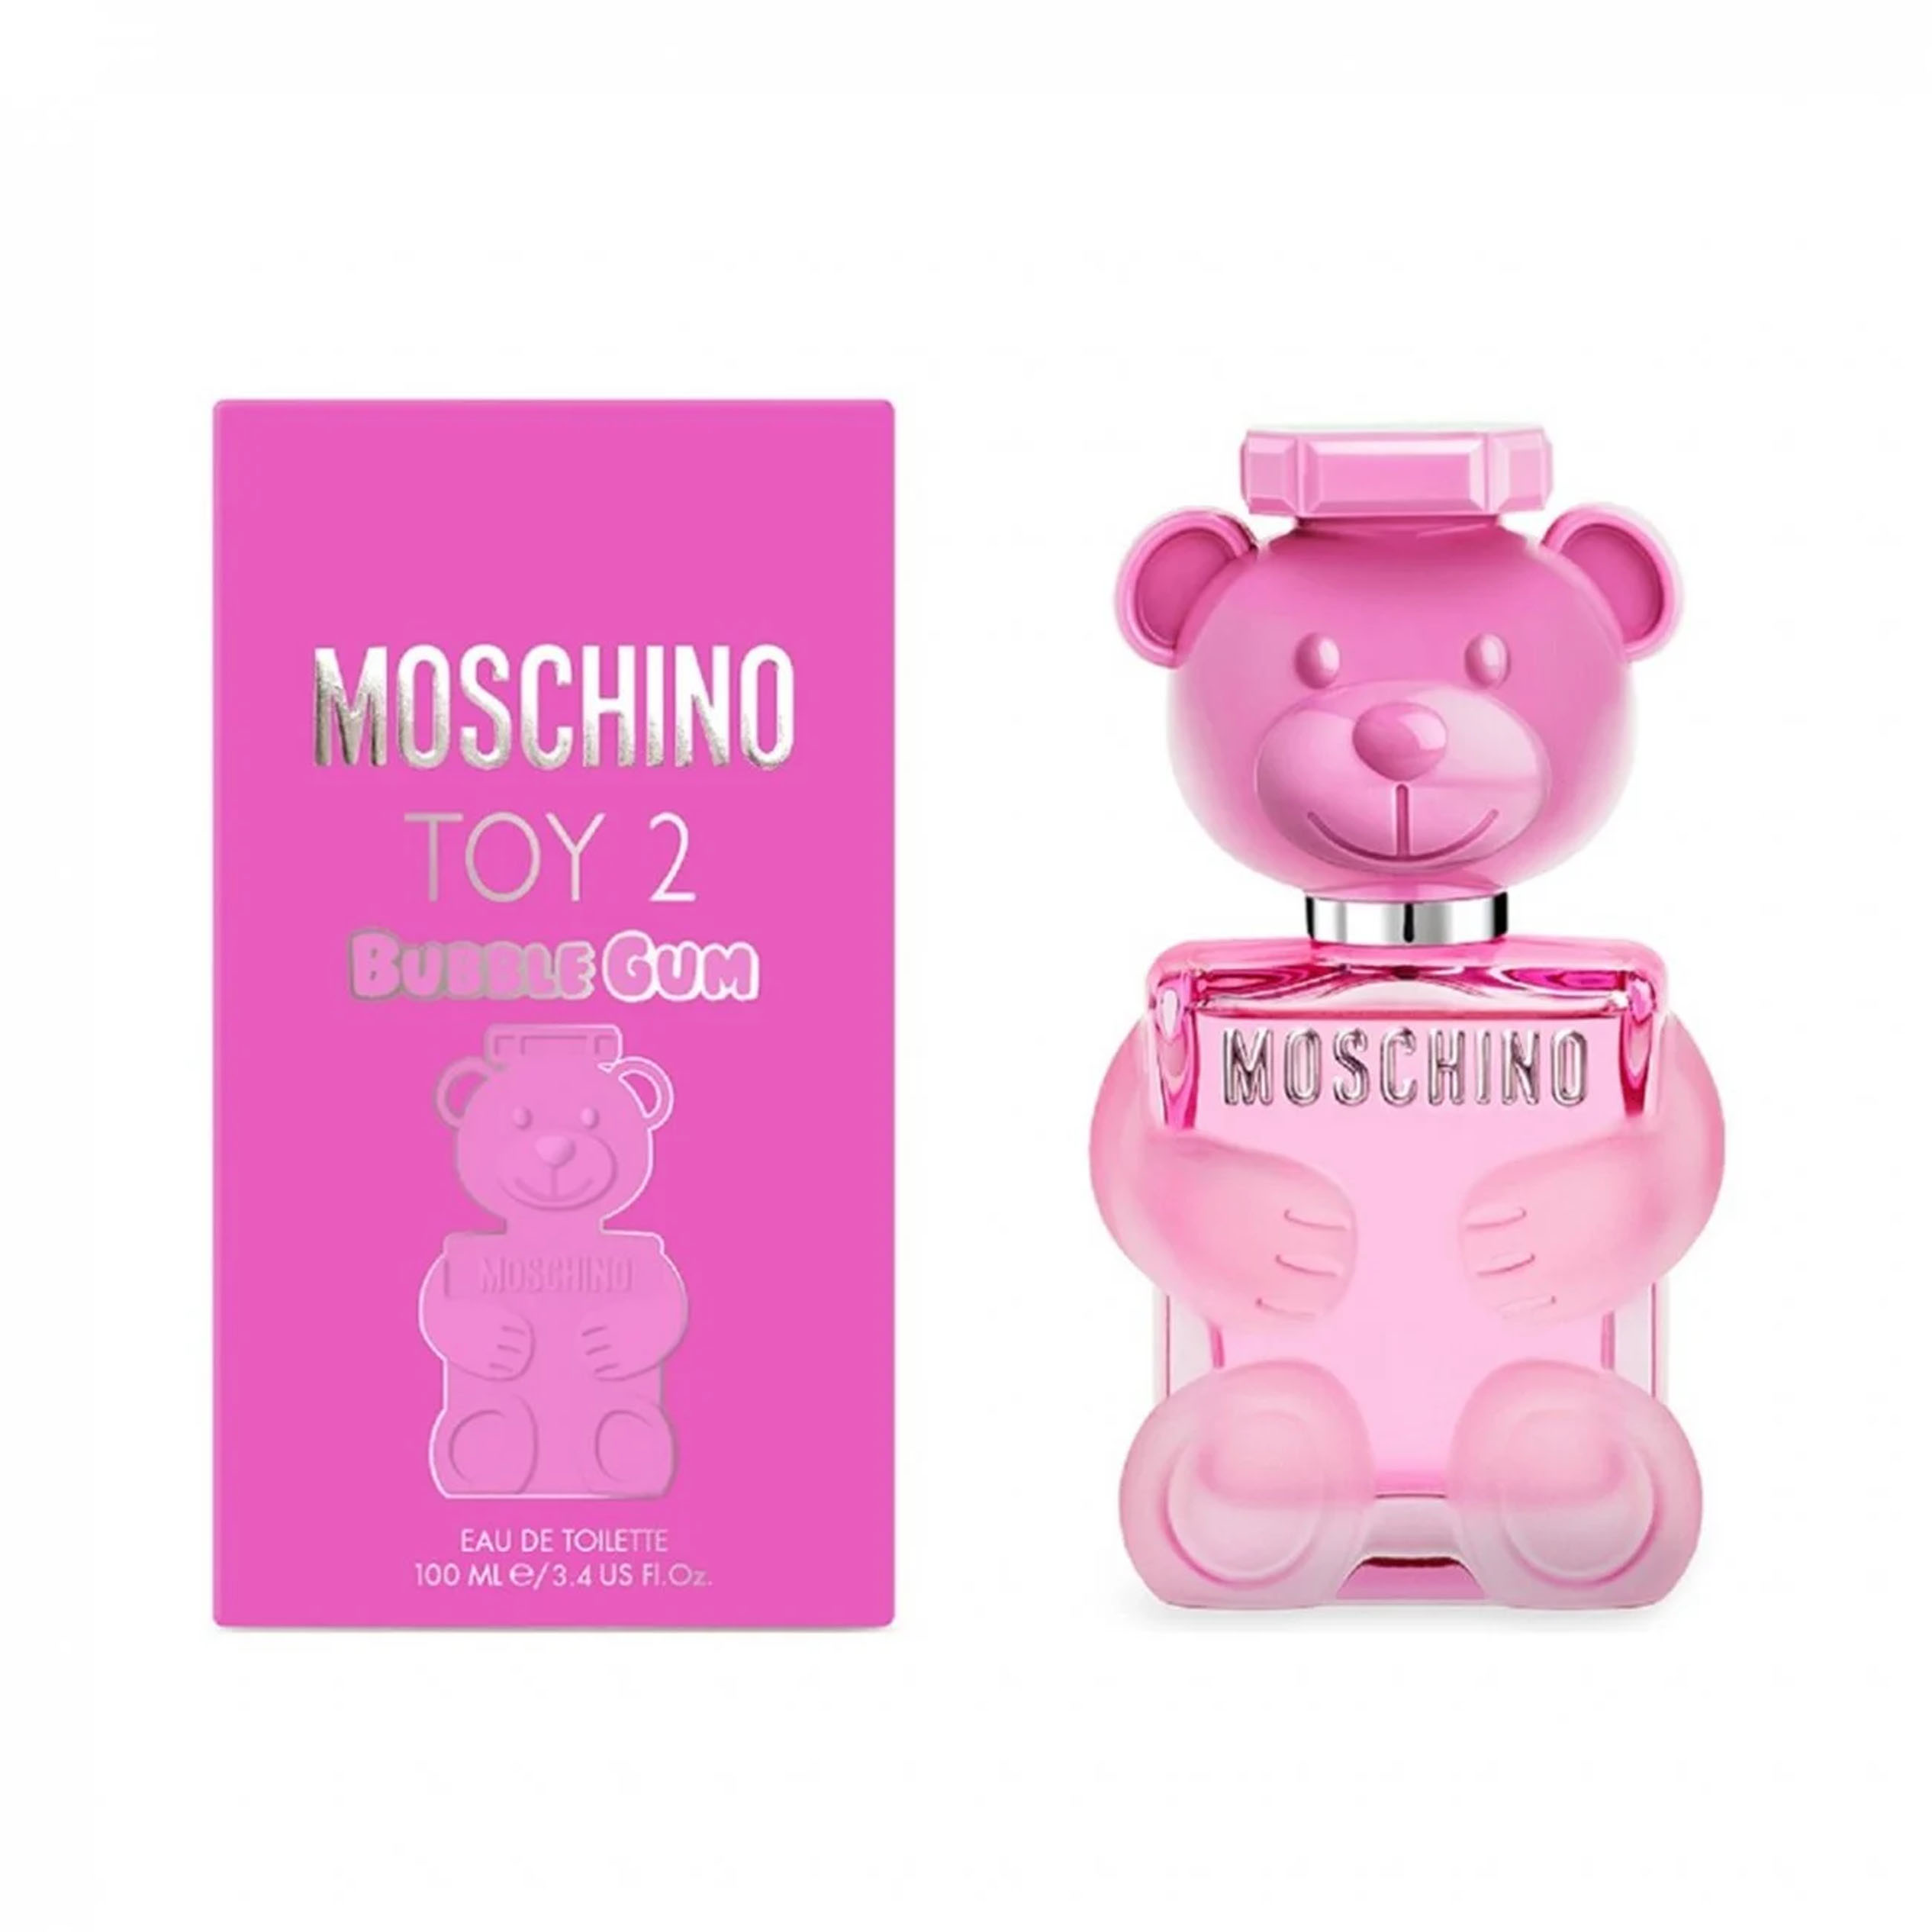 Perfume Toy 2 Bubble Gum Moschino   (Replica Con Fragancia Importada)- Mujer